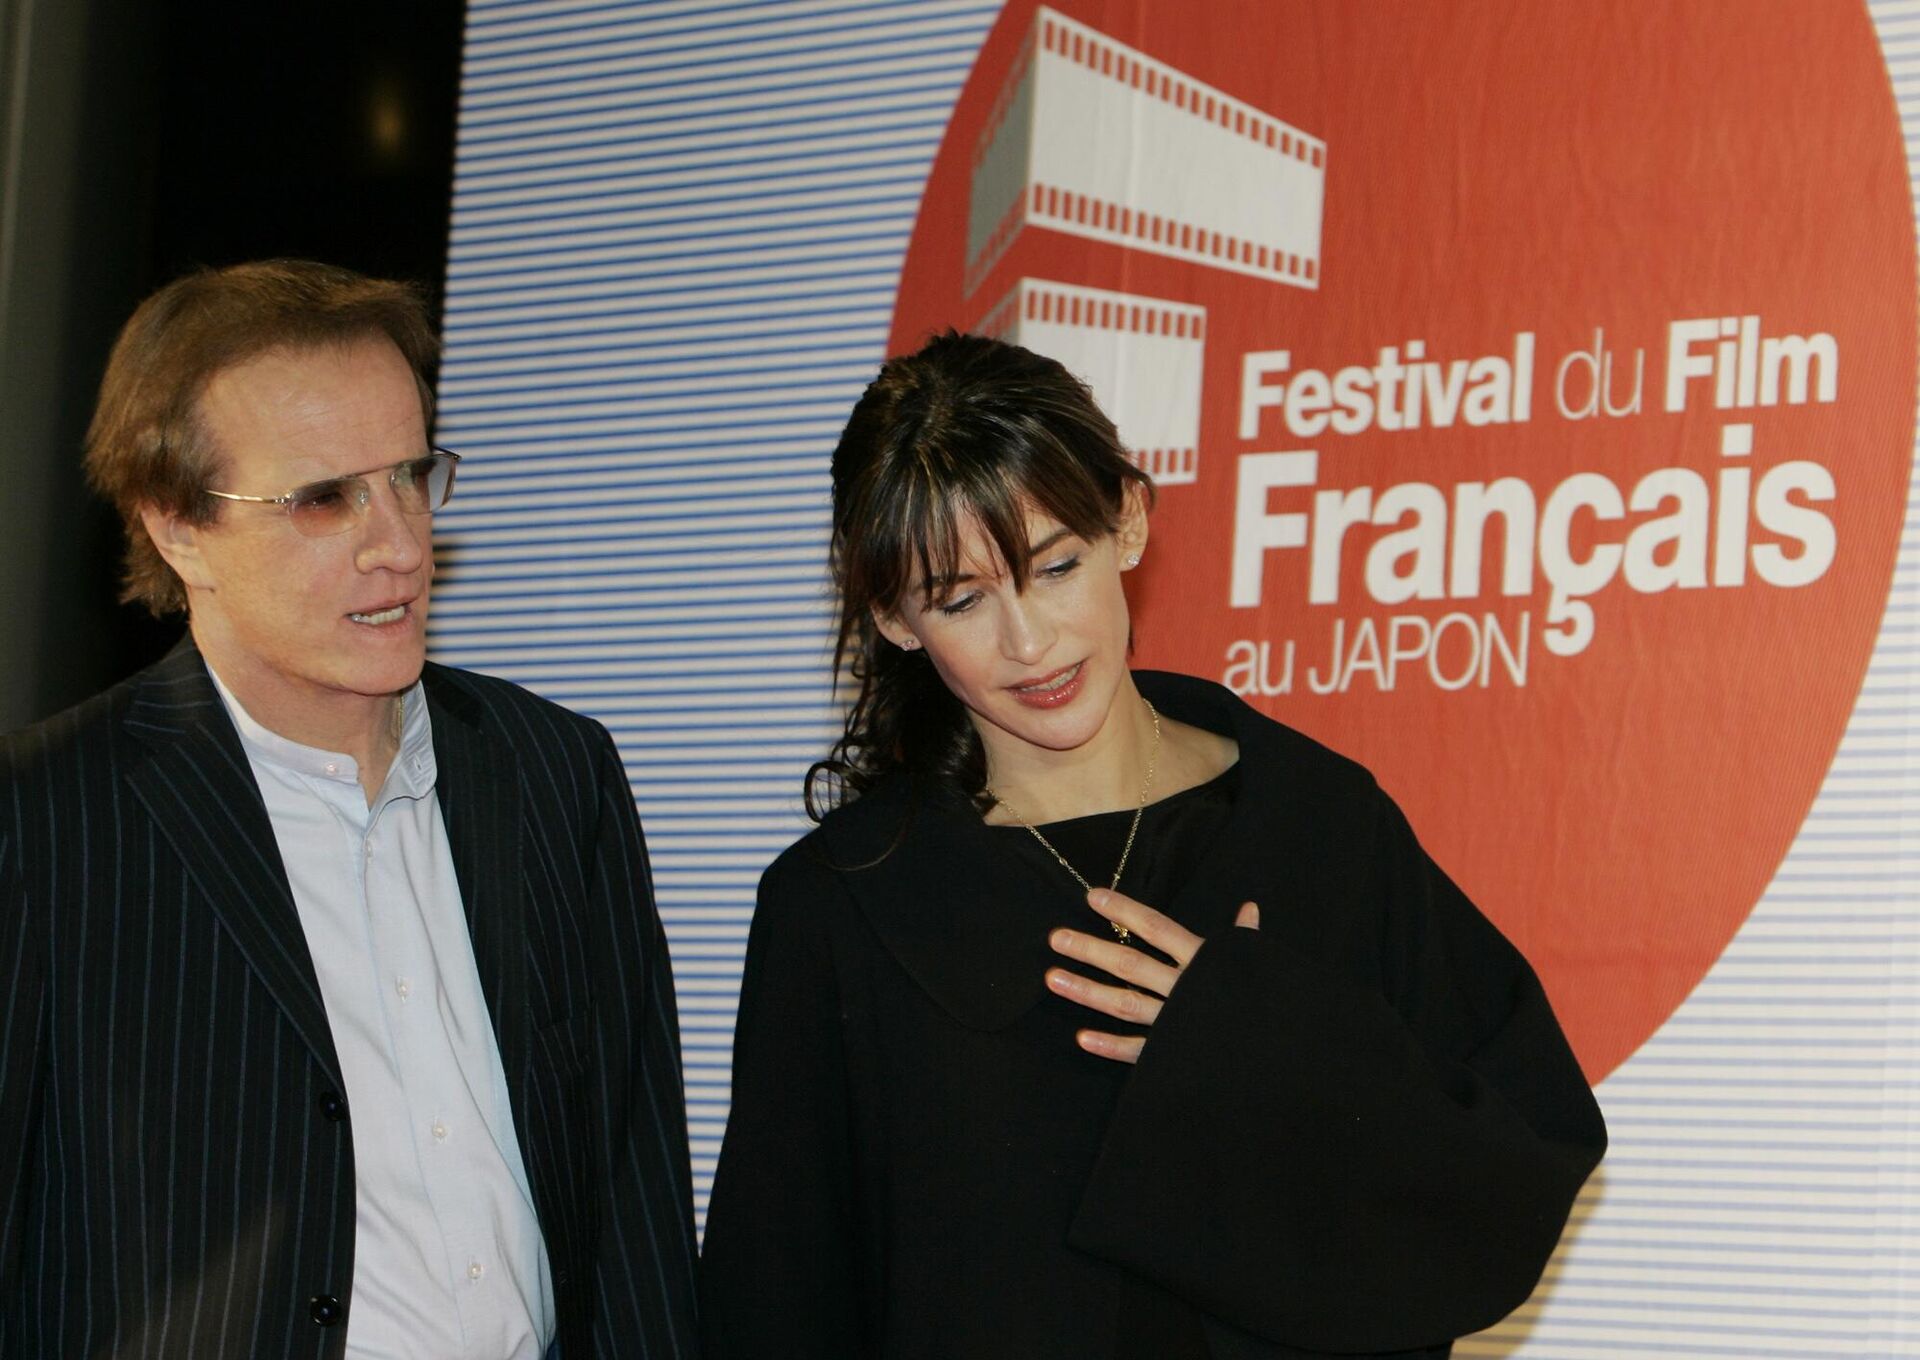 Французская актриса Софи Марсо (справа) и актер Кристофер Ламберт позируют фотографам на фестивале французского кино в Токио, 13 марта 2008 года - Sputnik Азербайджан, 1920, 28.03.2022